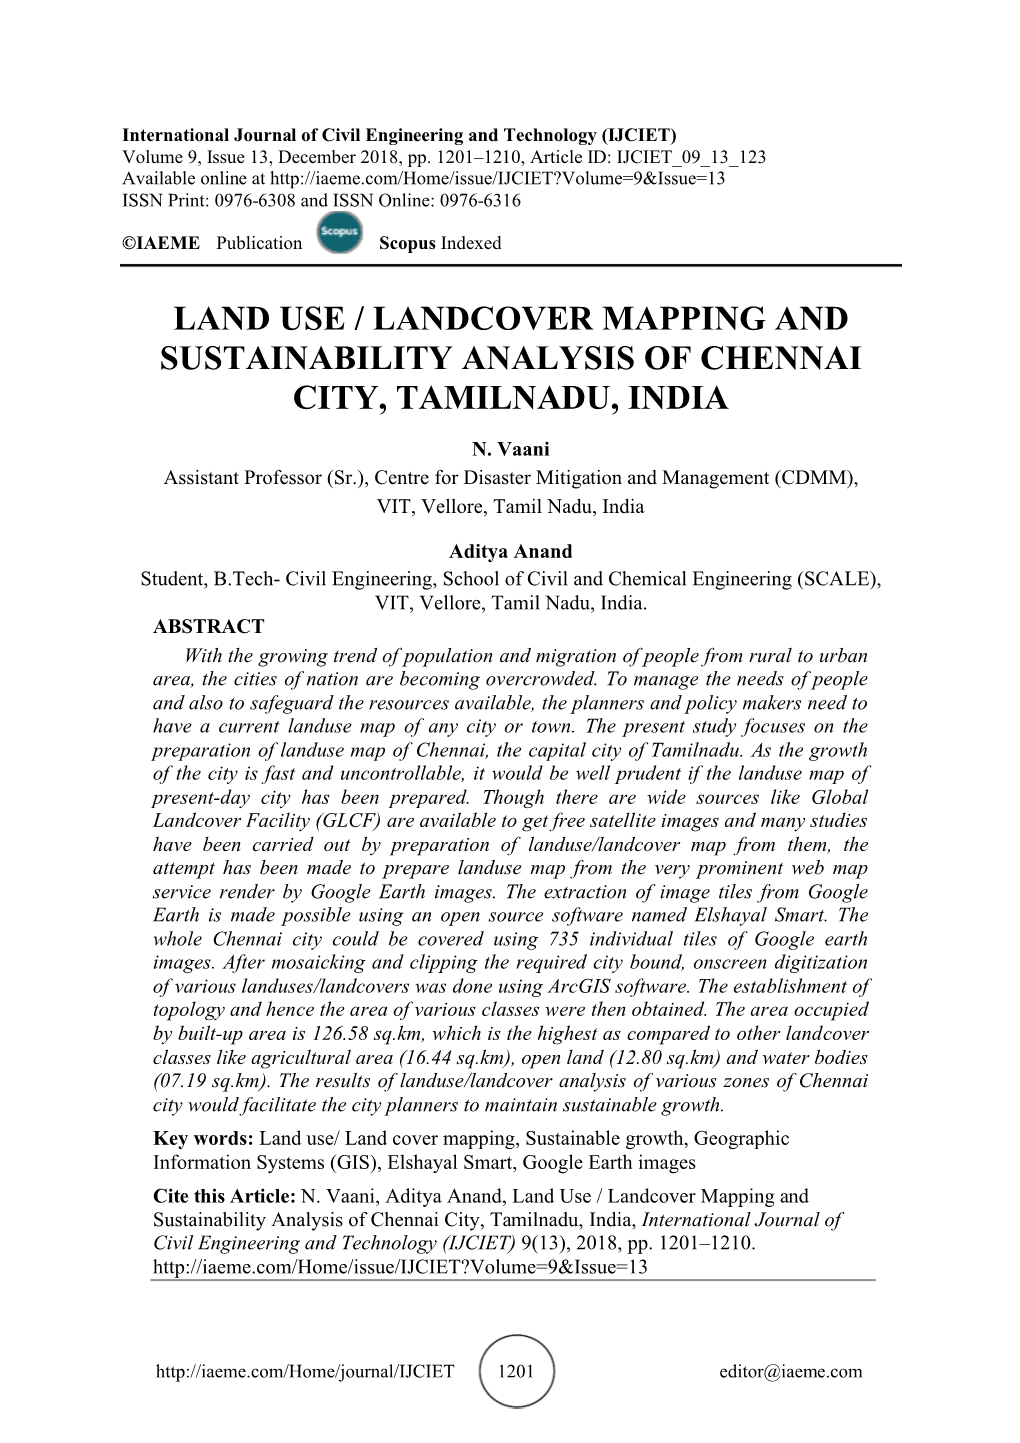 Land Use / Landcover Mapping and Sustainability Analysis of Chennai City, Tamilnadu, India